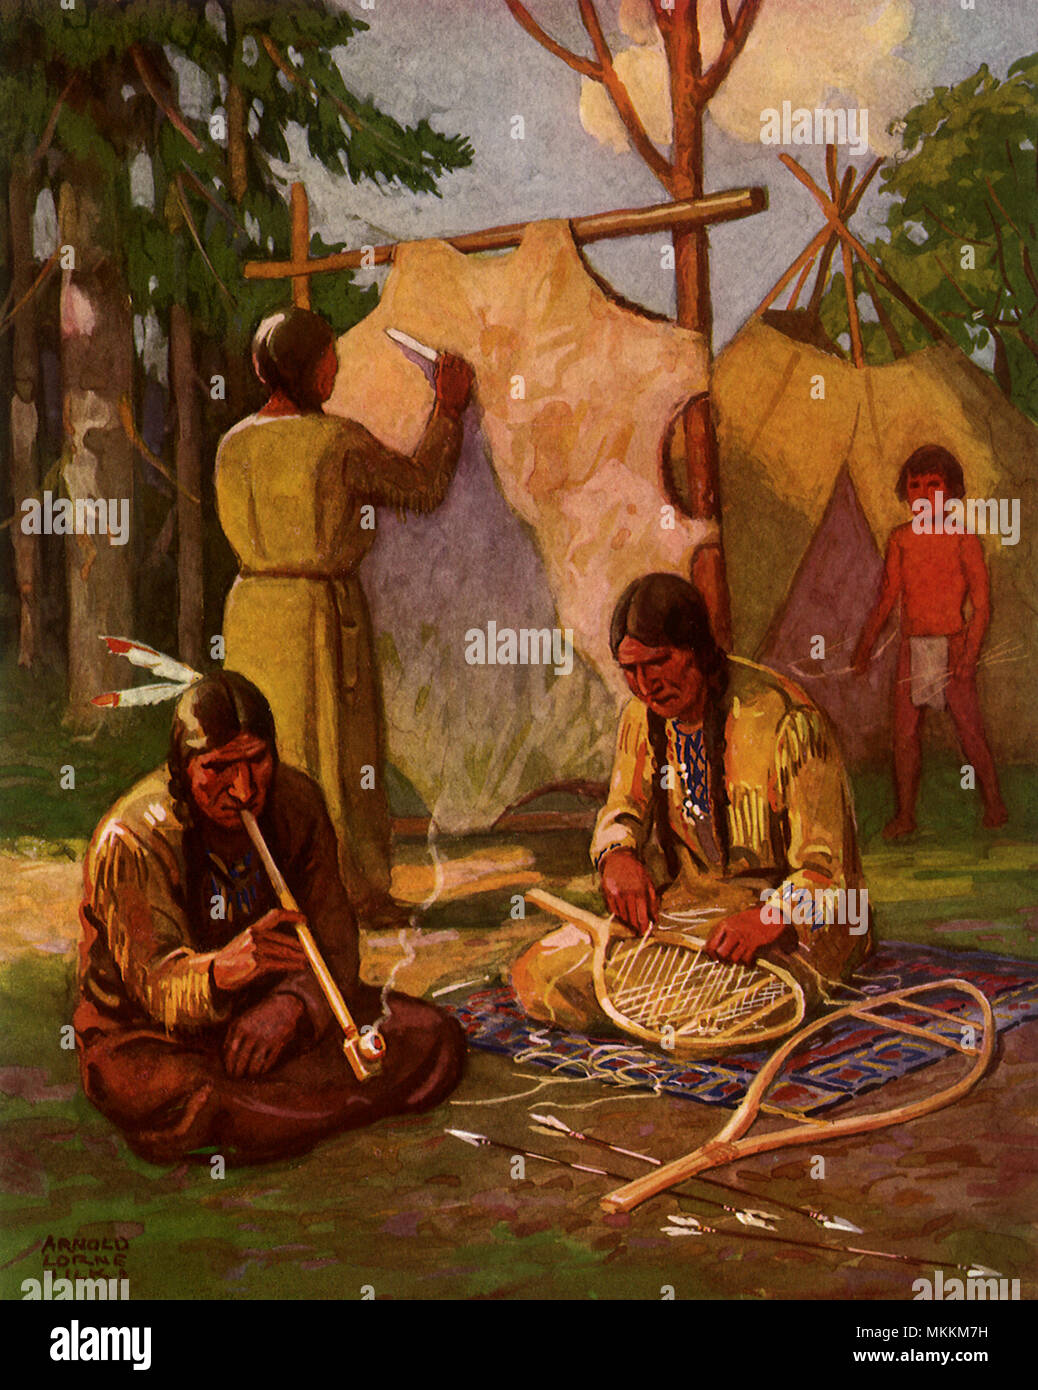 Native American Camp Stockfoto